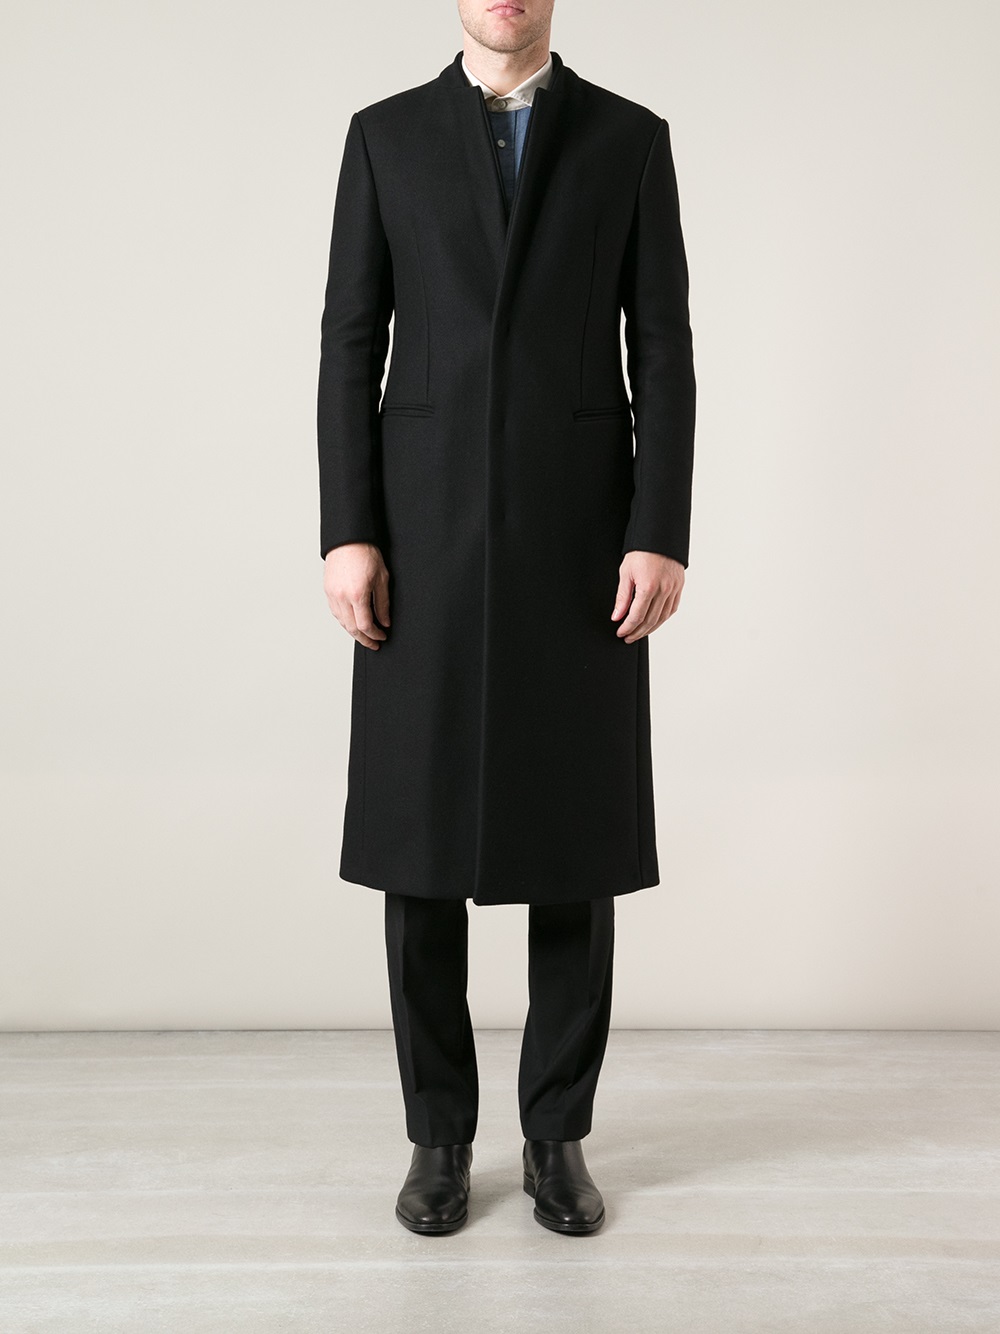 Formal Long Coat in Black for Men - Lyst